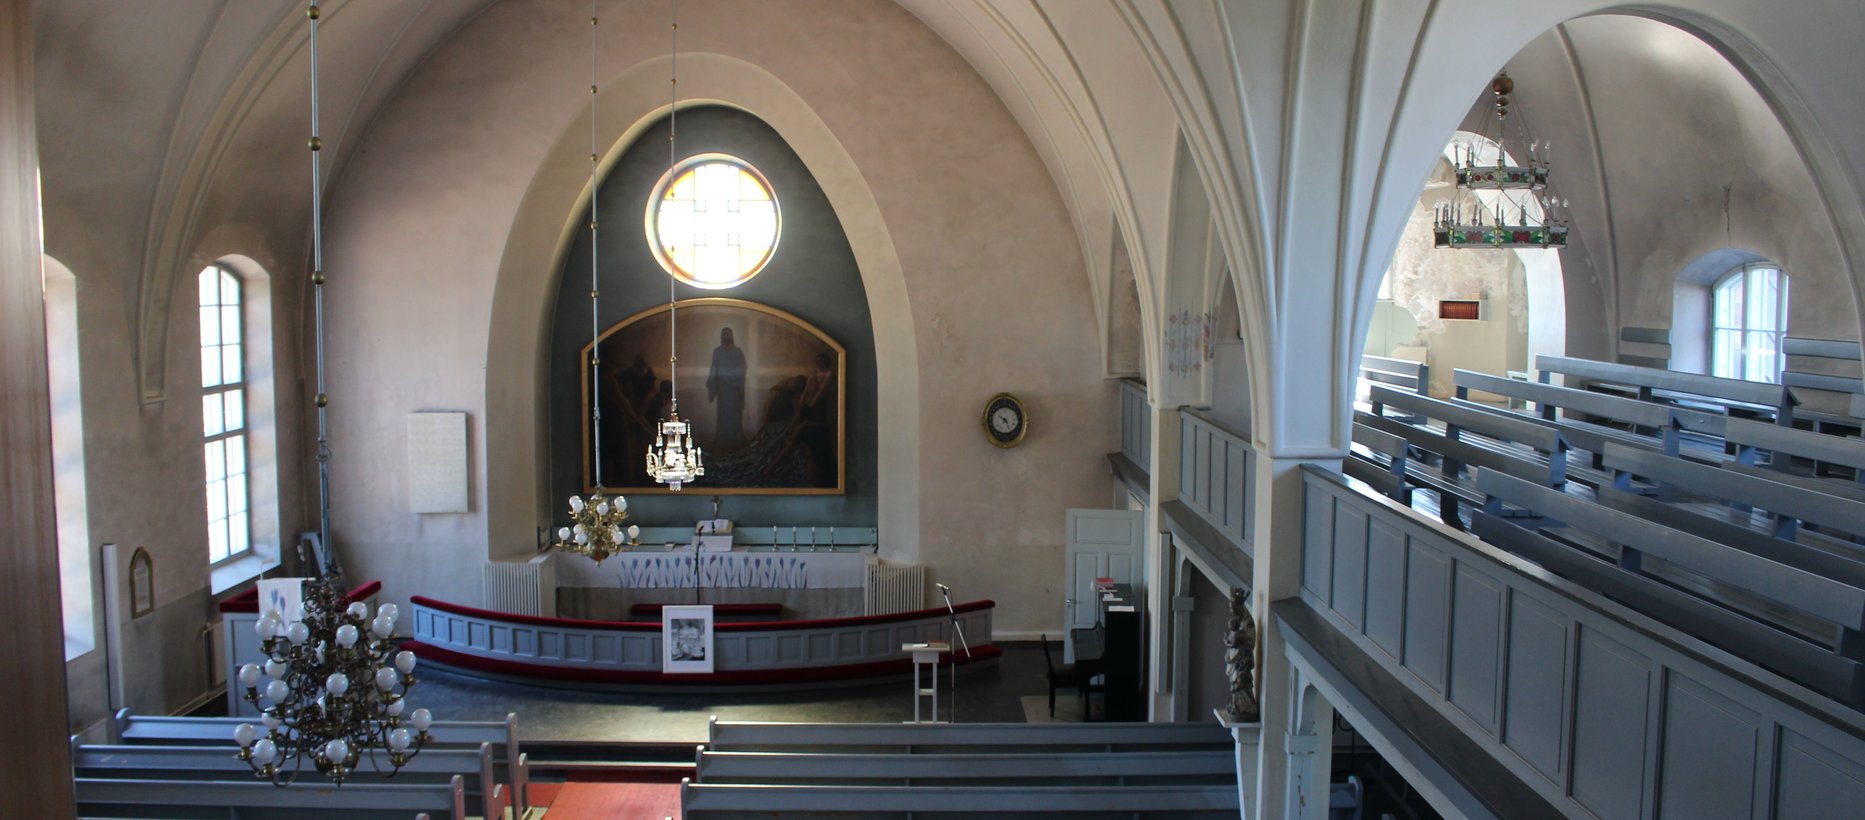 B3 Luvian kirkko, urkuparvelta alttarille2_XL.jpg